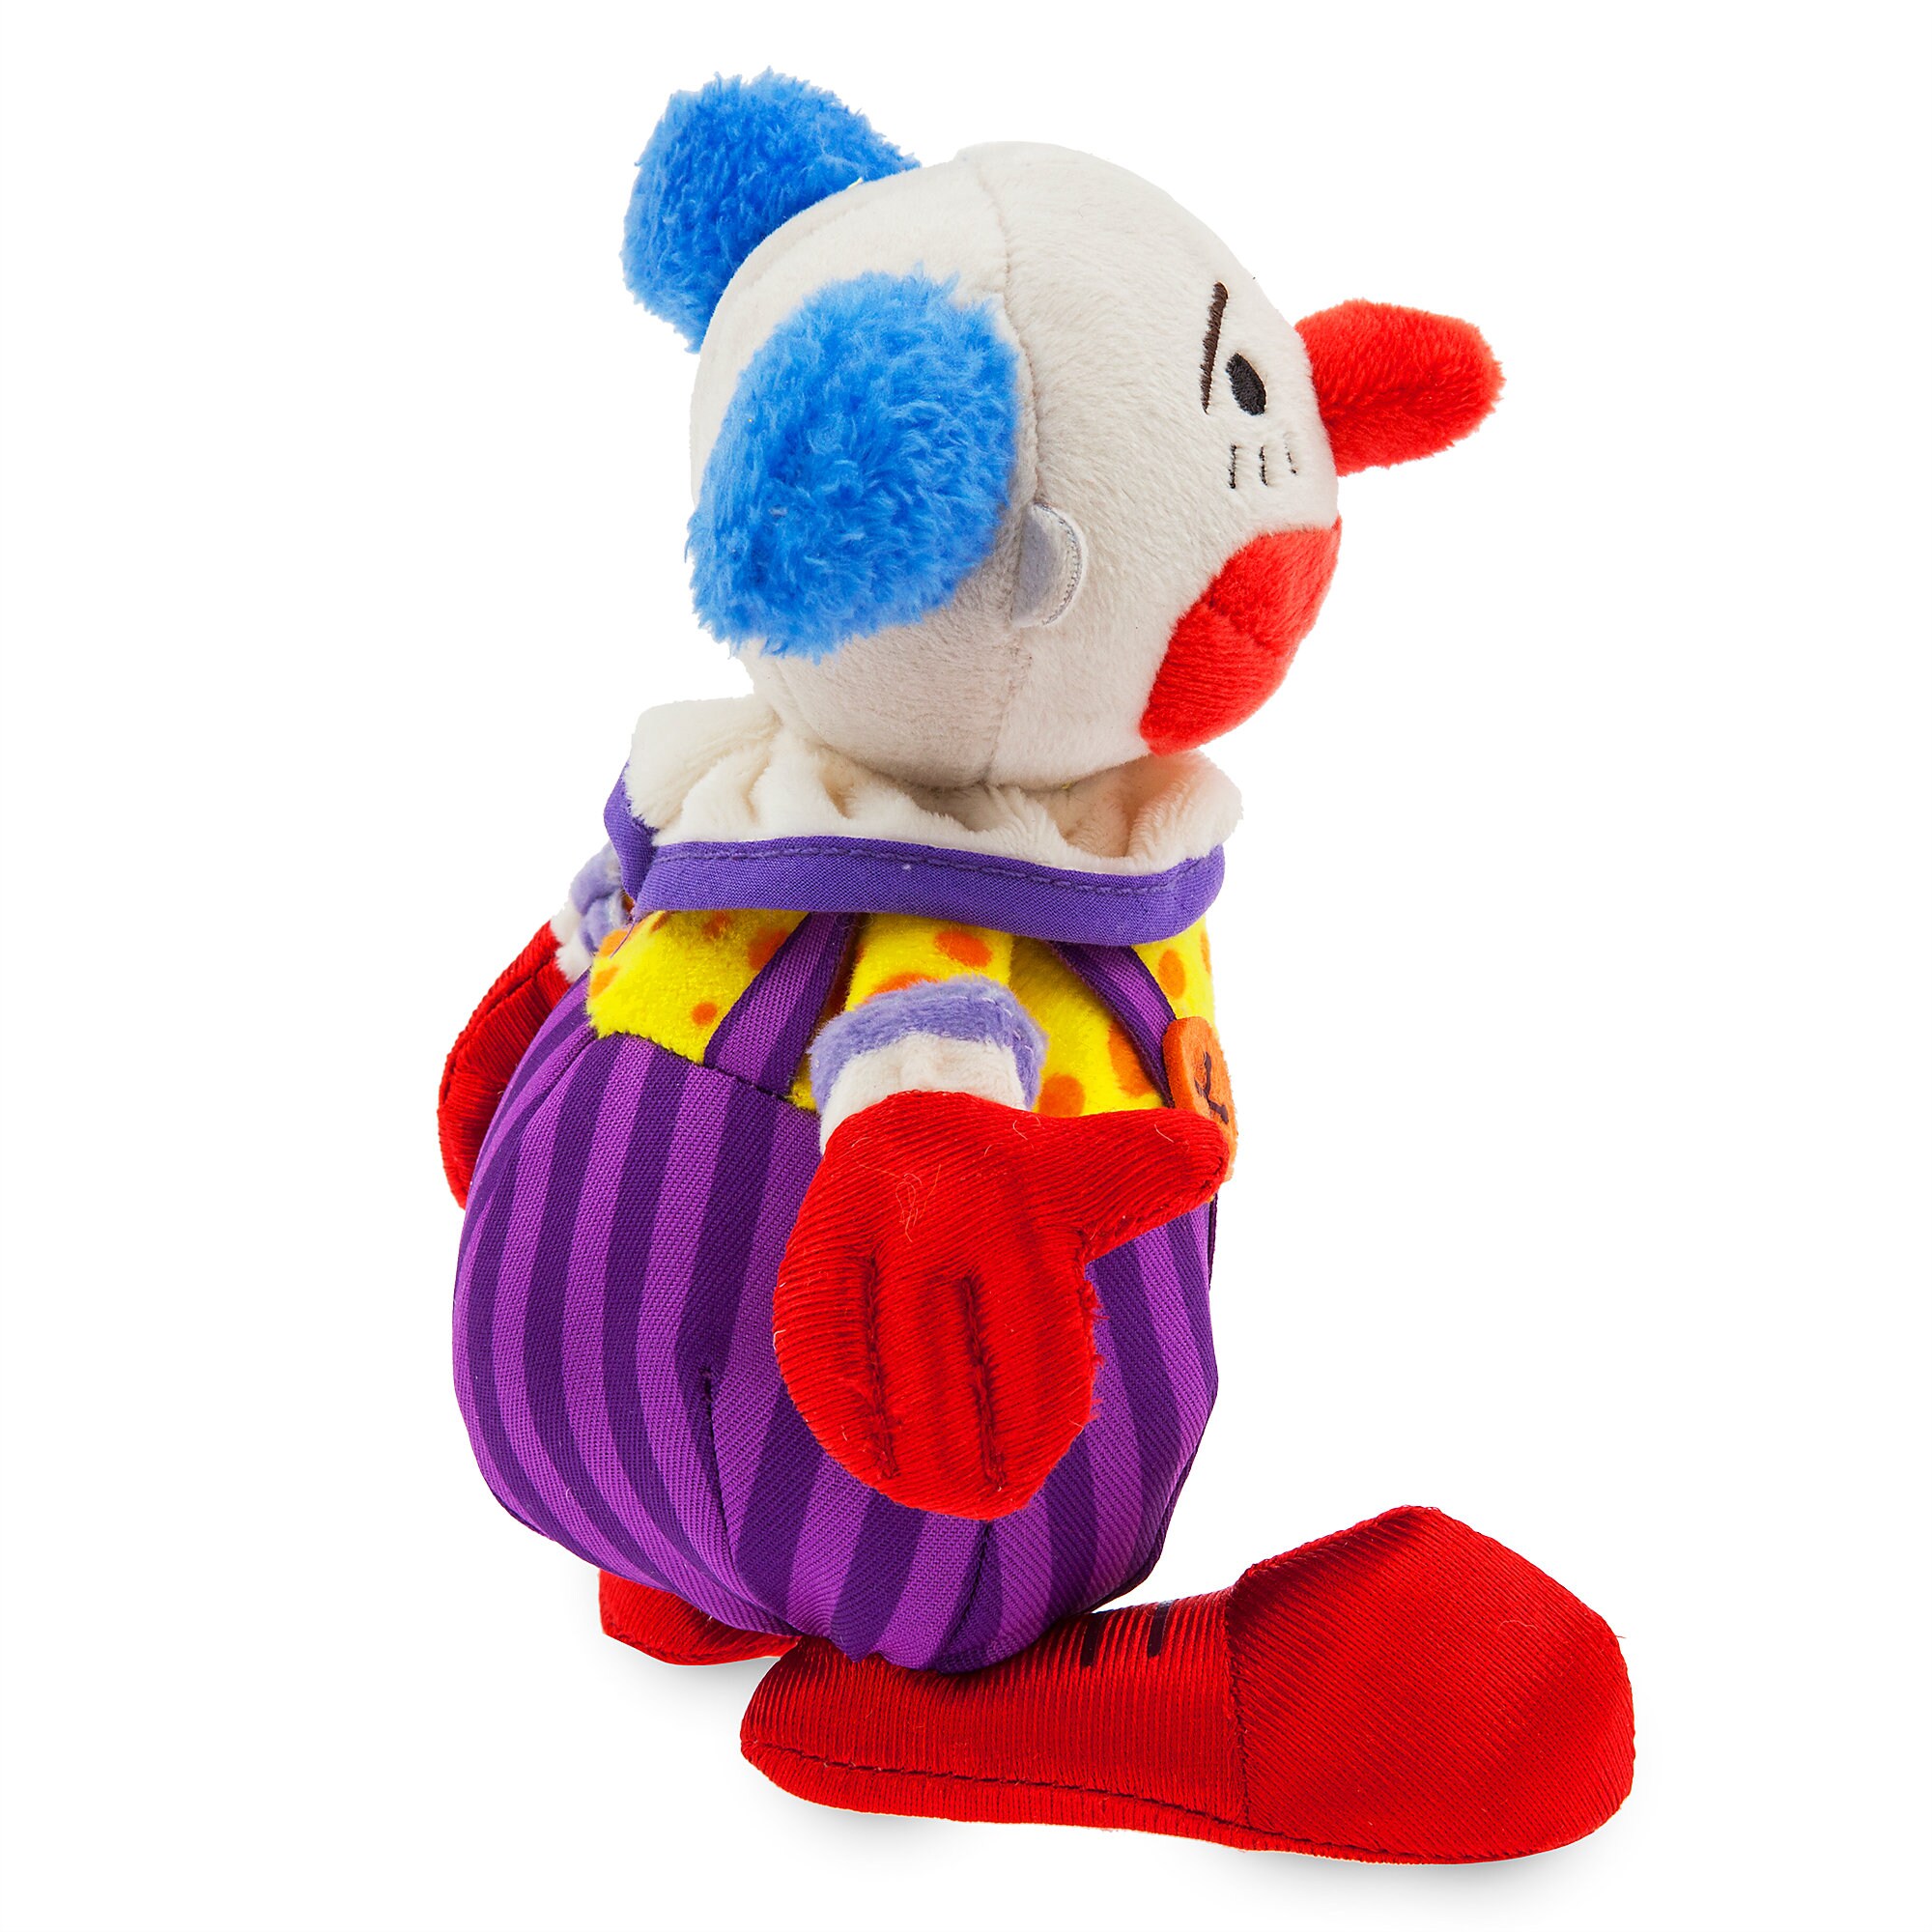 Chuckles the Clown Plush - Toy Story - Mini Bean Bag - 7''